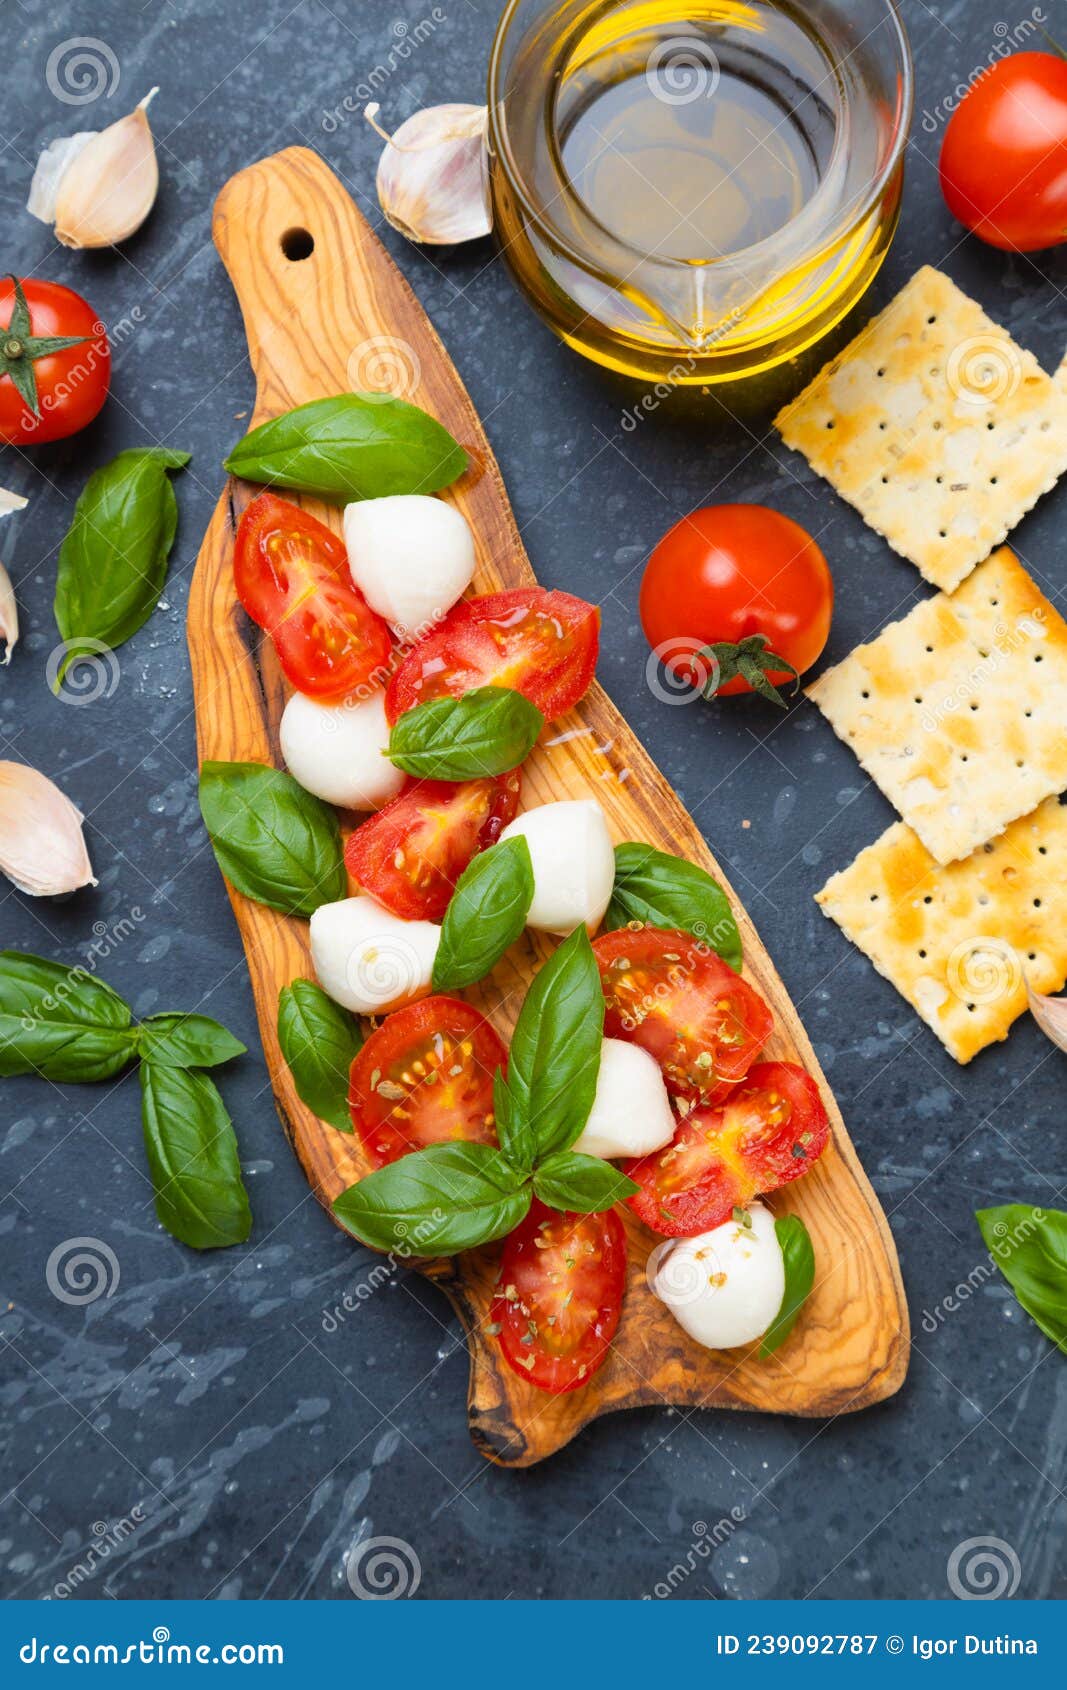 Italian Caprese Salad with Mozzarella Cheese Stock Image - Image of ...